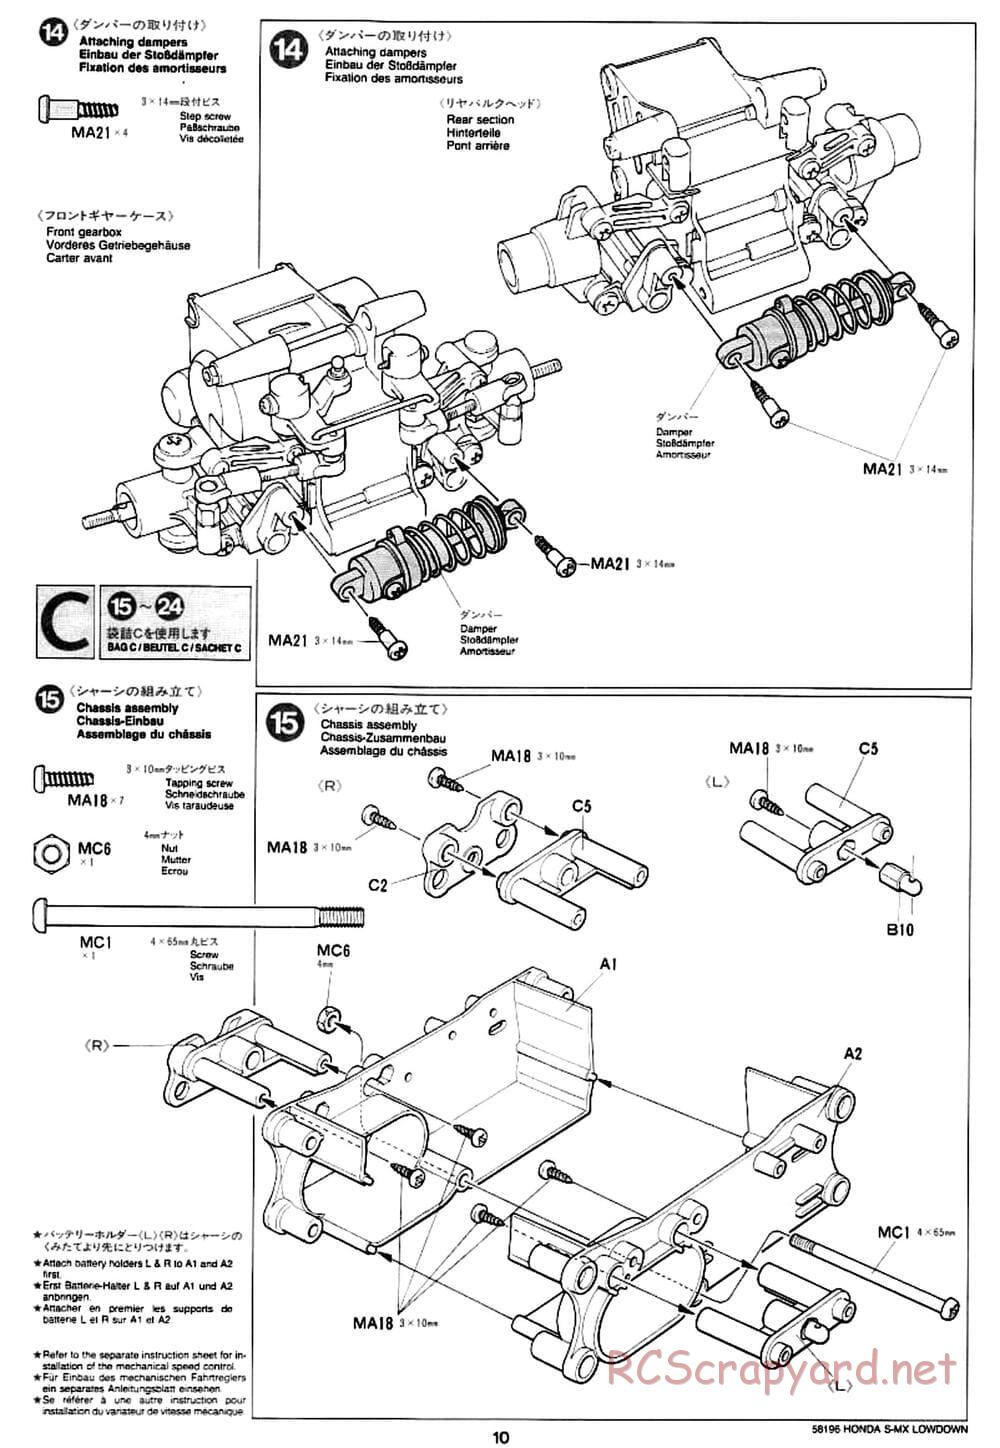 Tamiya - Honda S-MX Lowdown - M01 Chassis - Manual - Page 10